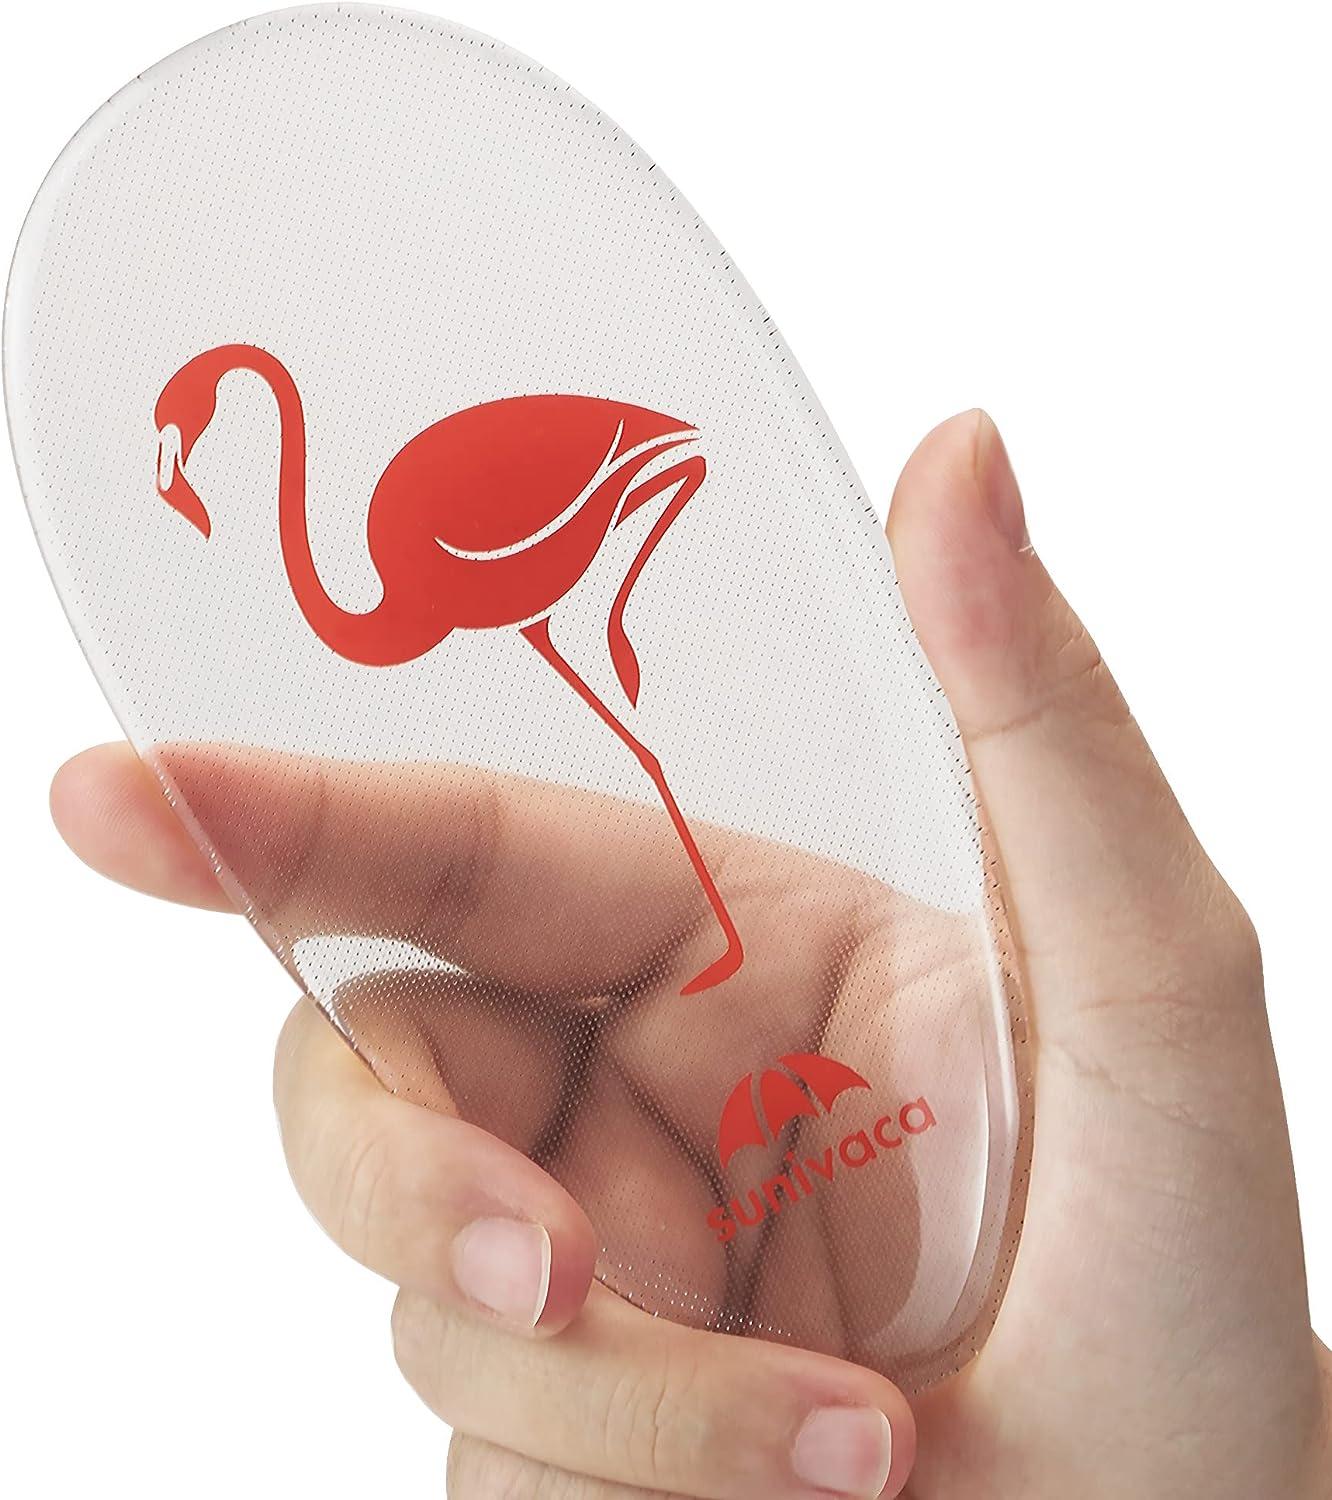 Sunivaca Glass Foot File Callus Remover for Feet Flamingo Gifts